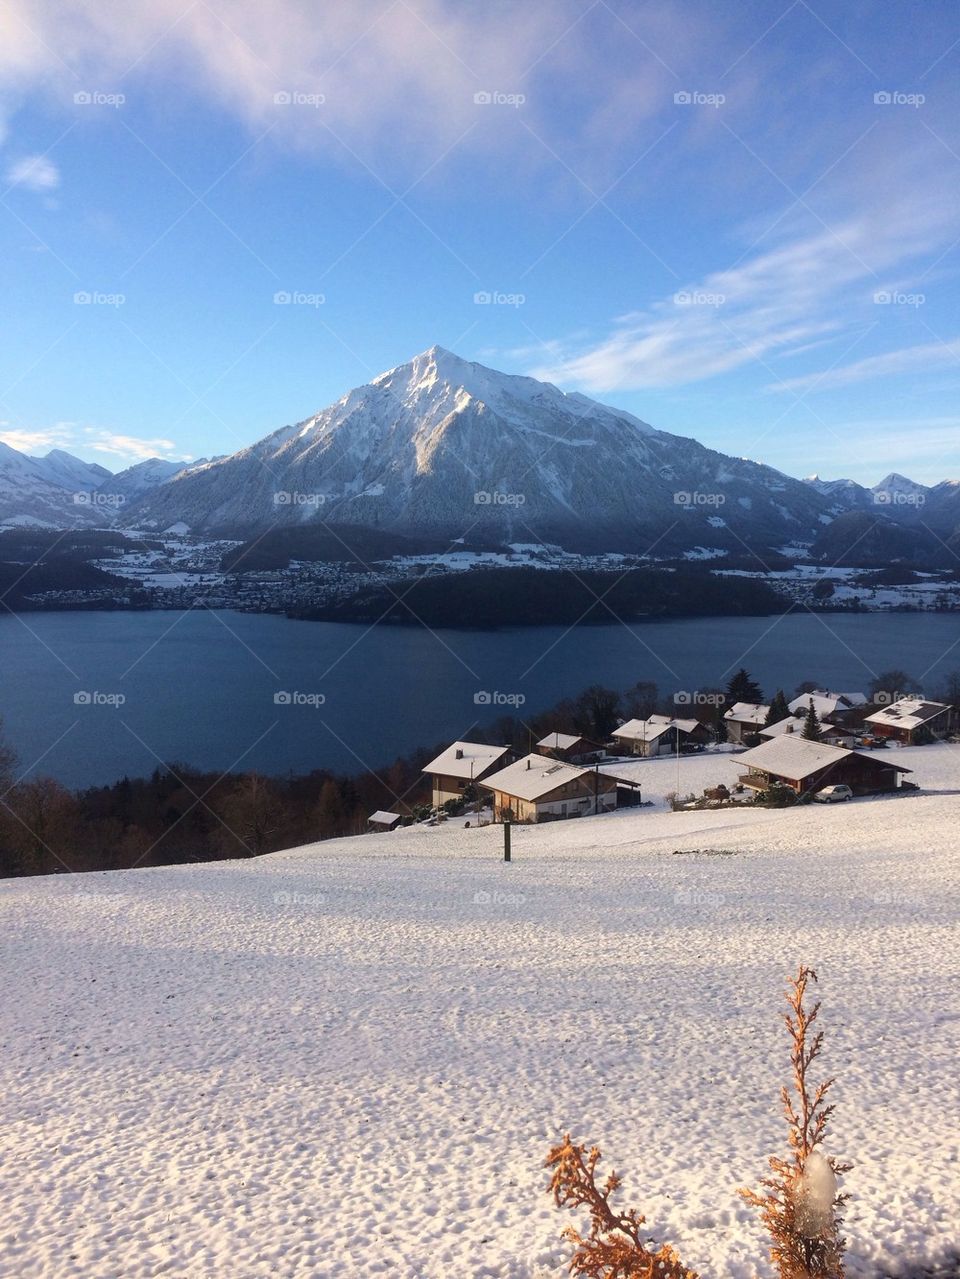 Niesen / Snow mountain